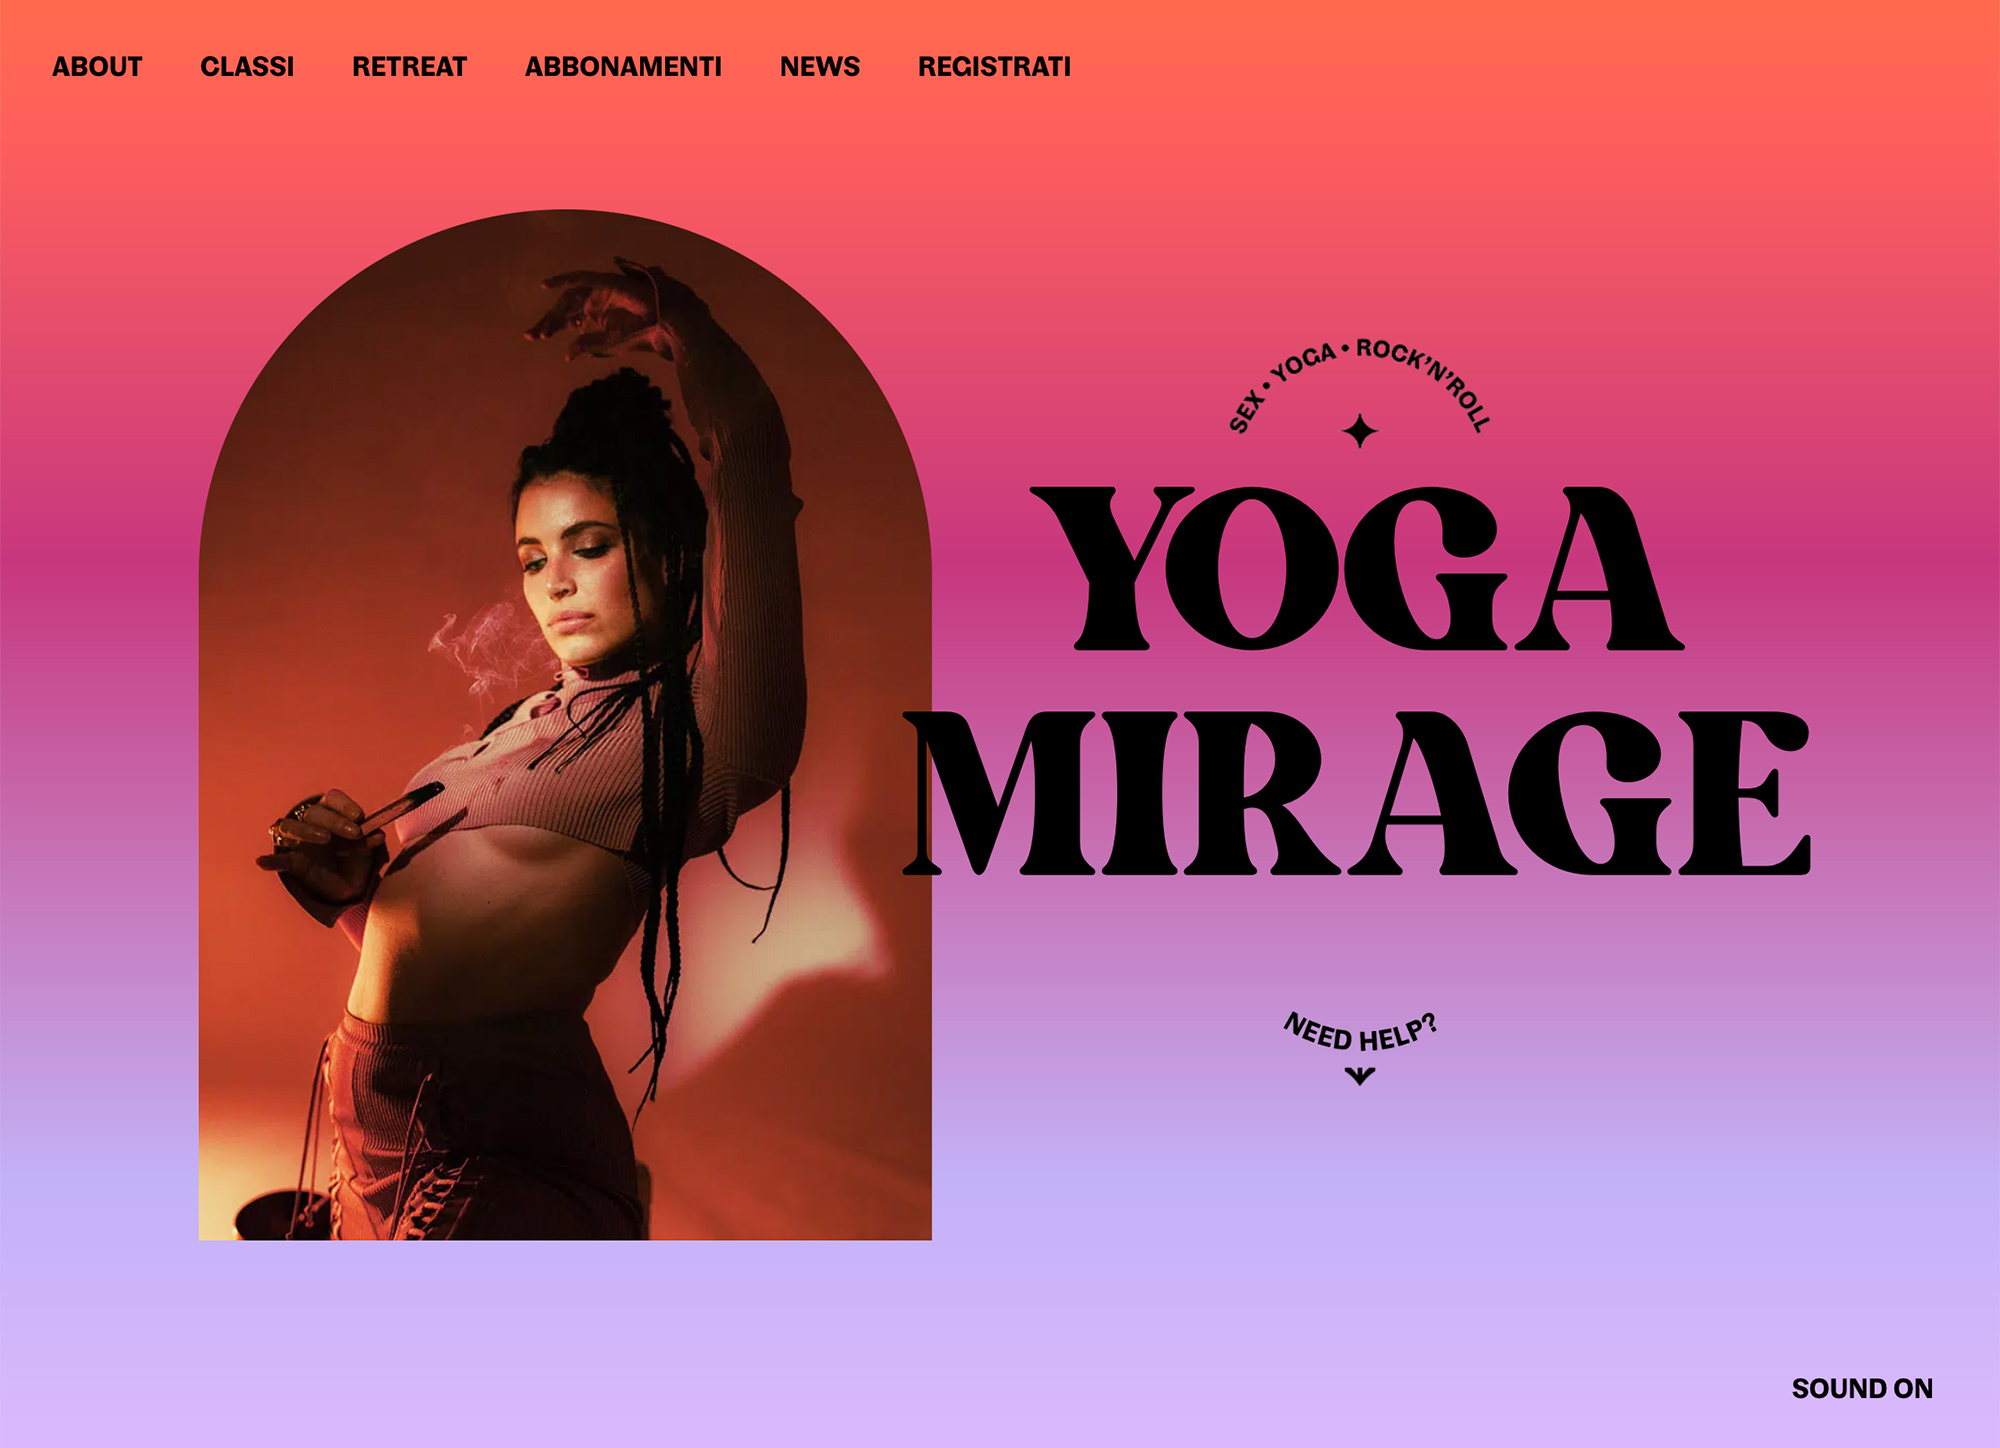 Yoga Mirage - project 2021 Neue Milano